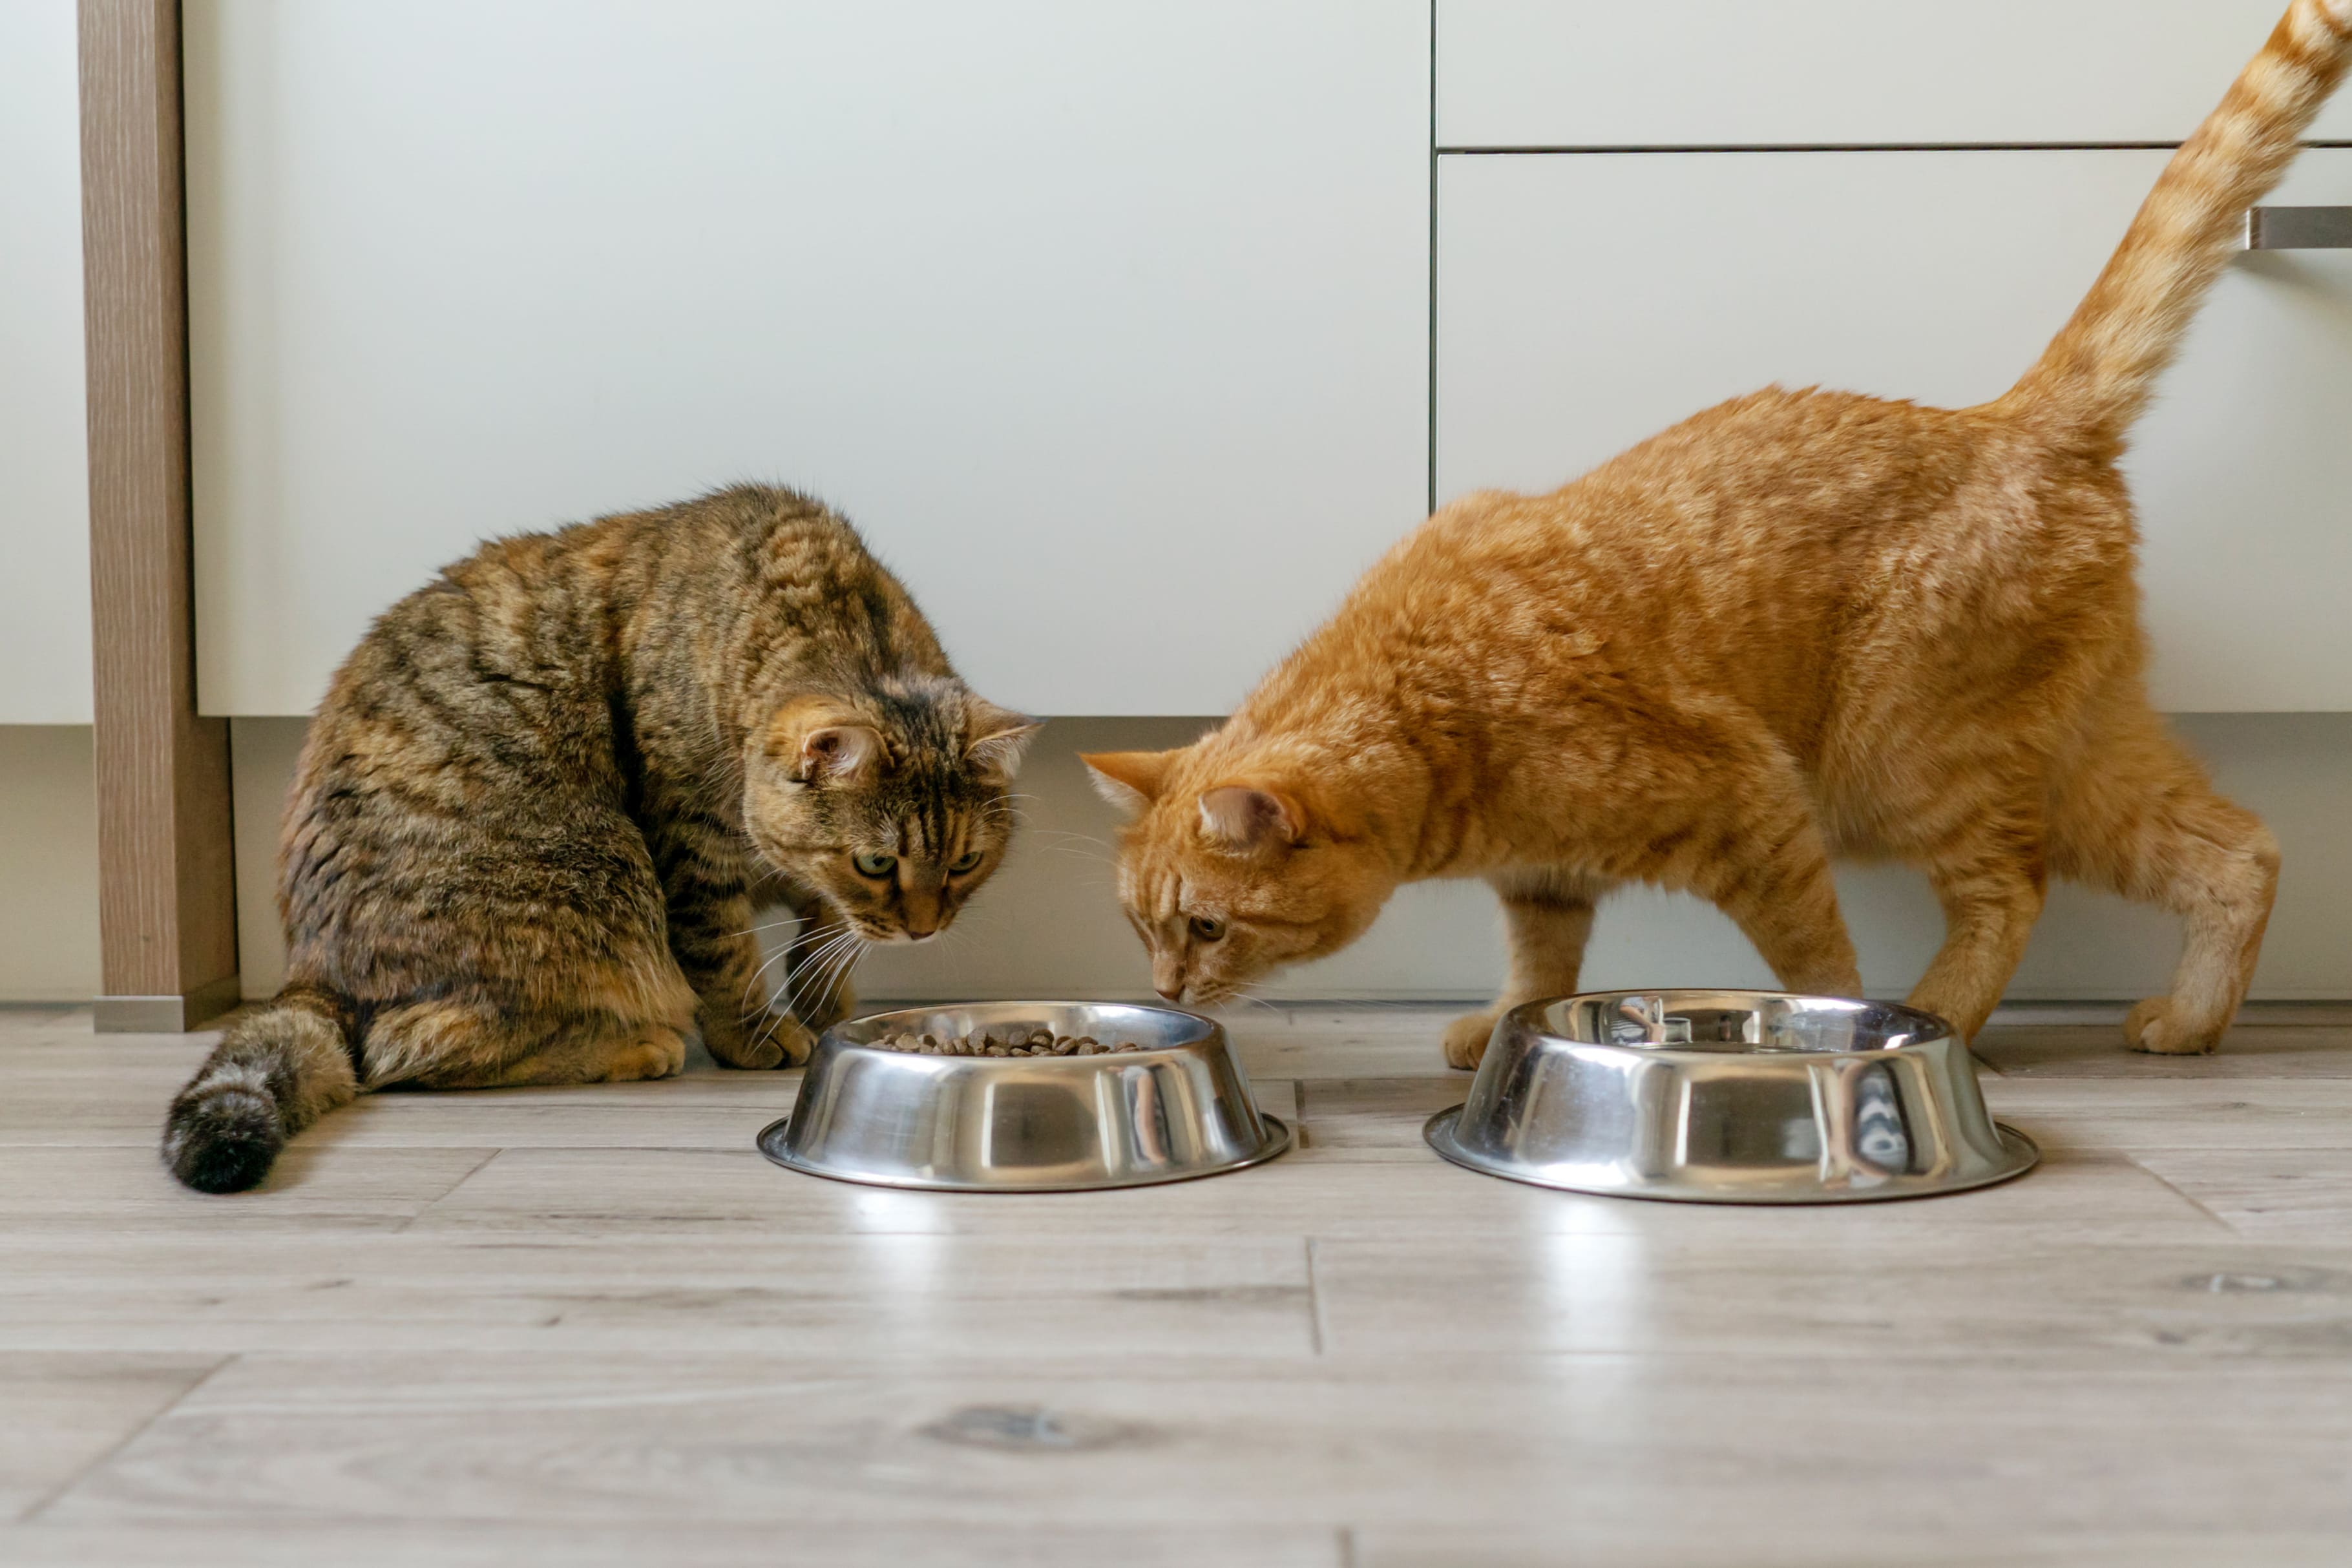 Sensitivity Control Royal Canin Food for Cats - My Pet World App